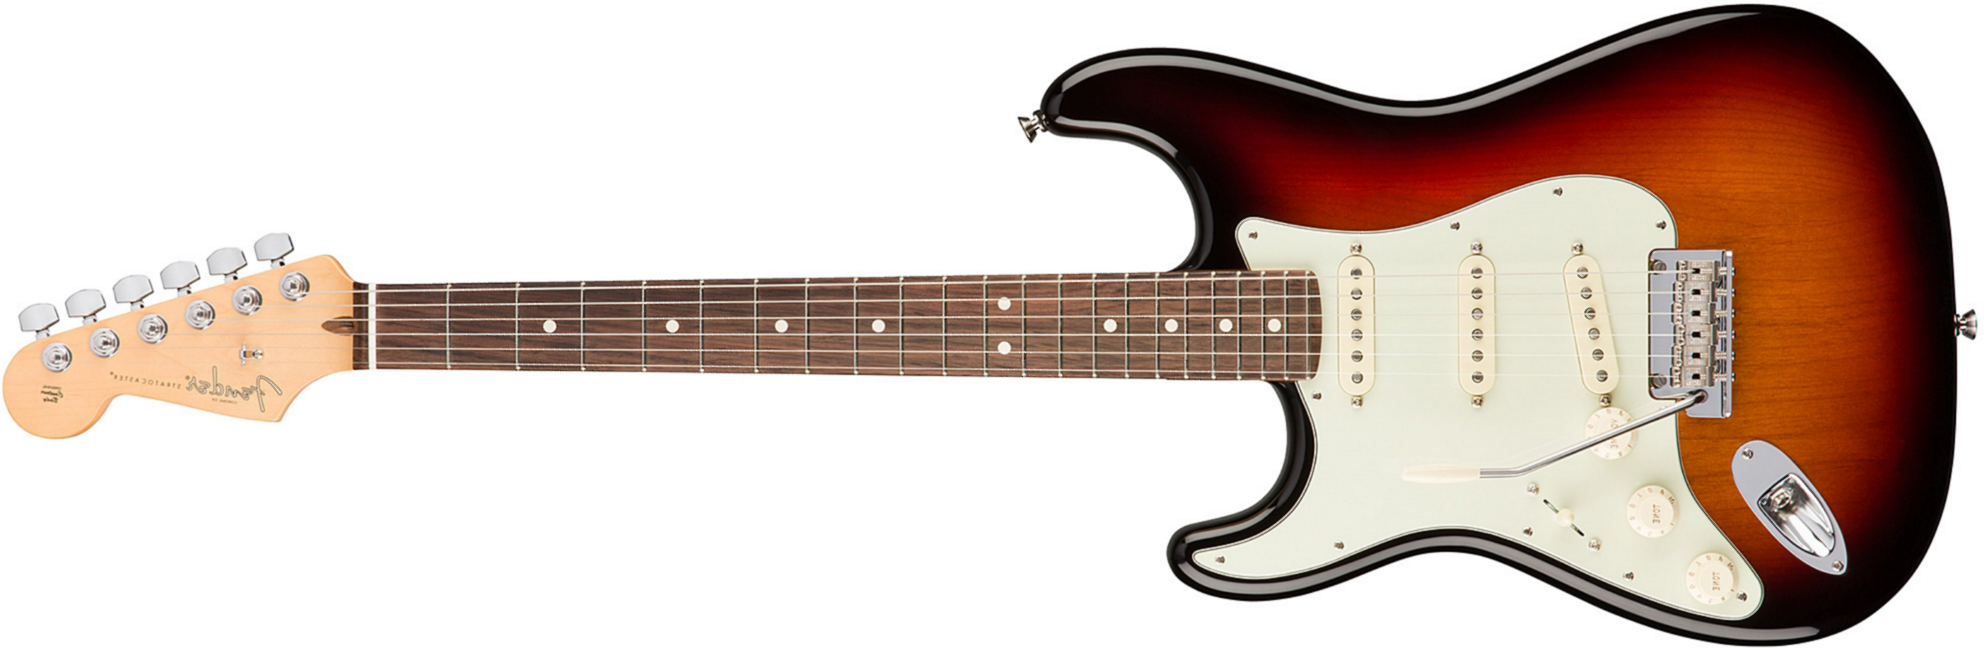 Fender Strat American Professional Lh Usa Gaucher 3s Rw - 3-color Sunburst - Left-handed electric guitar - Main picture